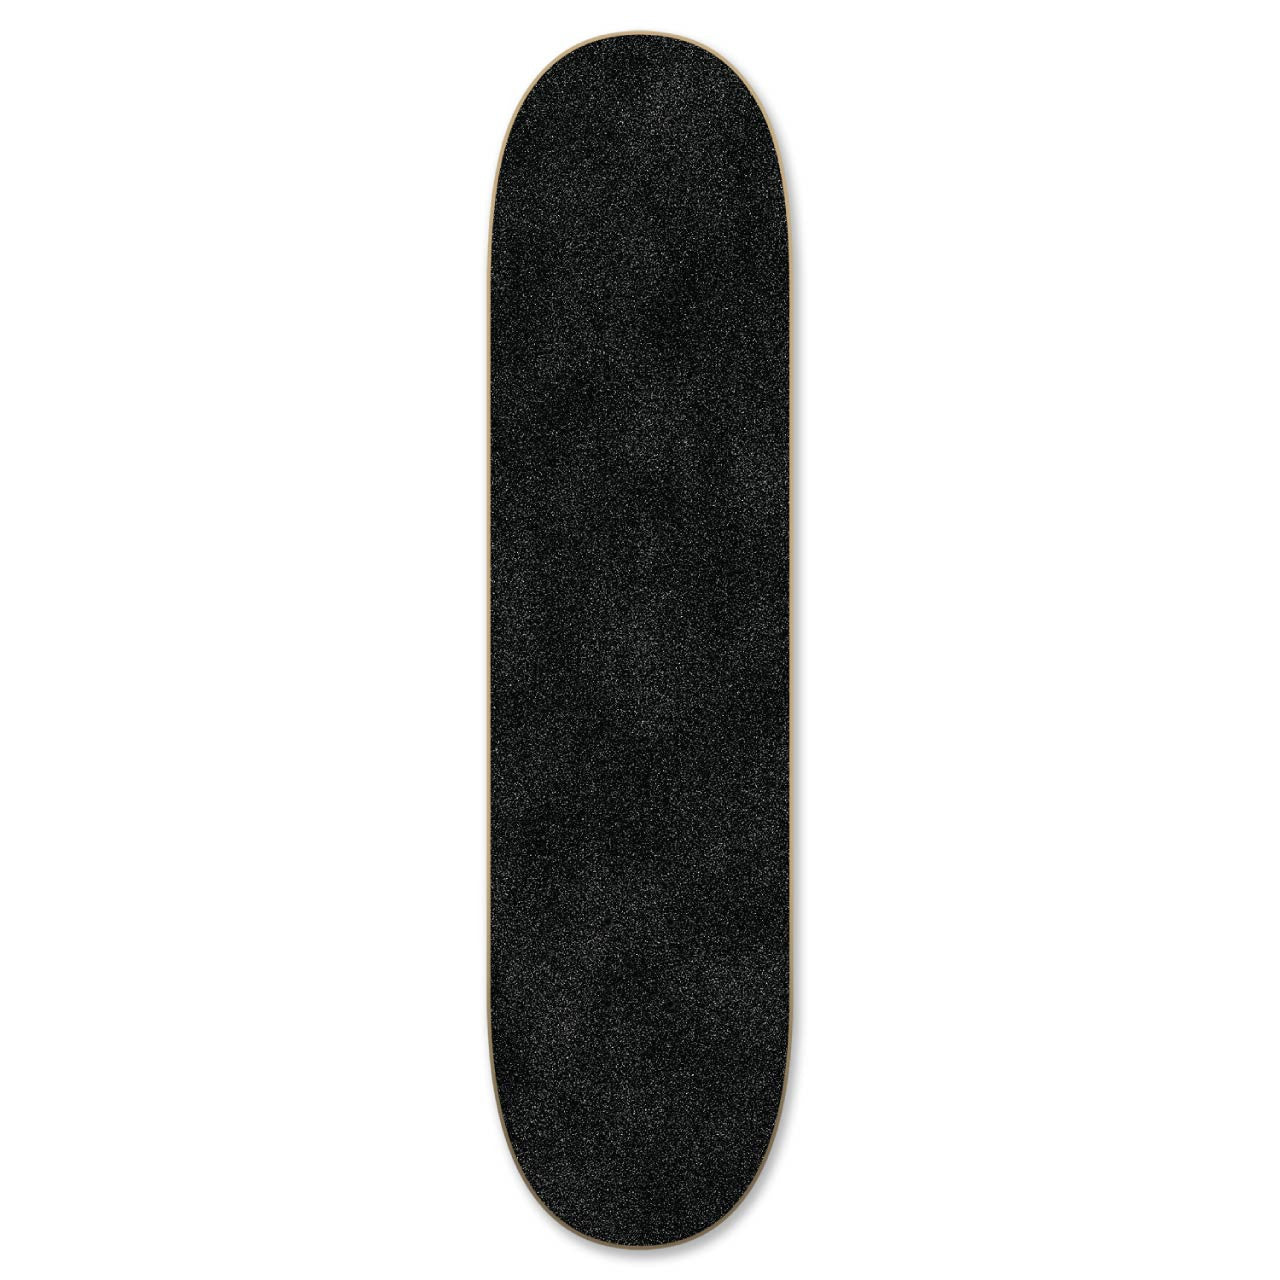 Graphic Skateboard Deck - Retro Series - Snikt